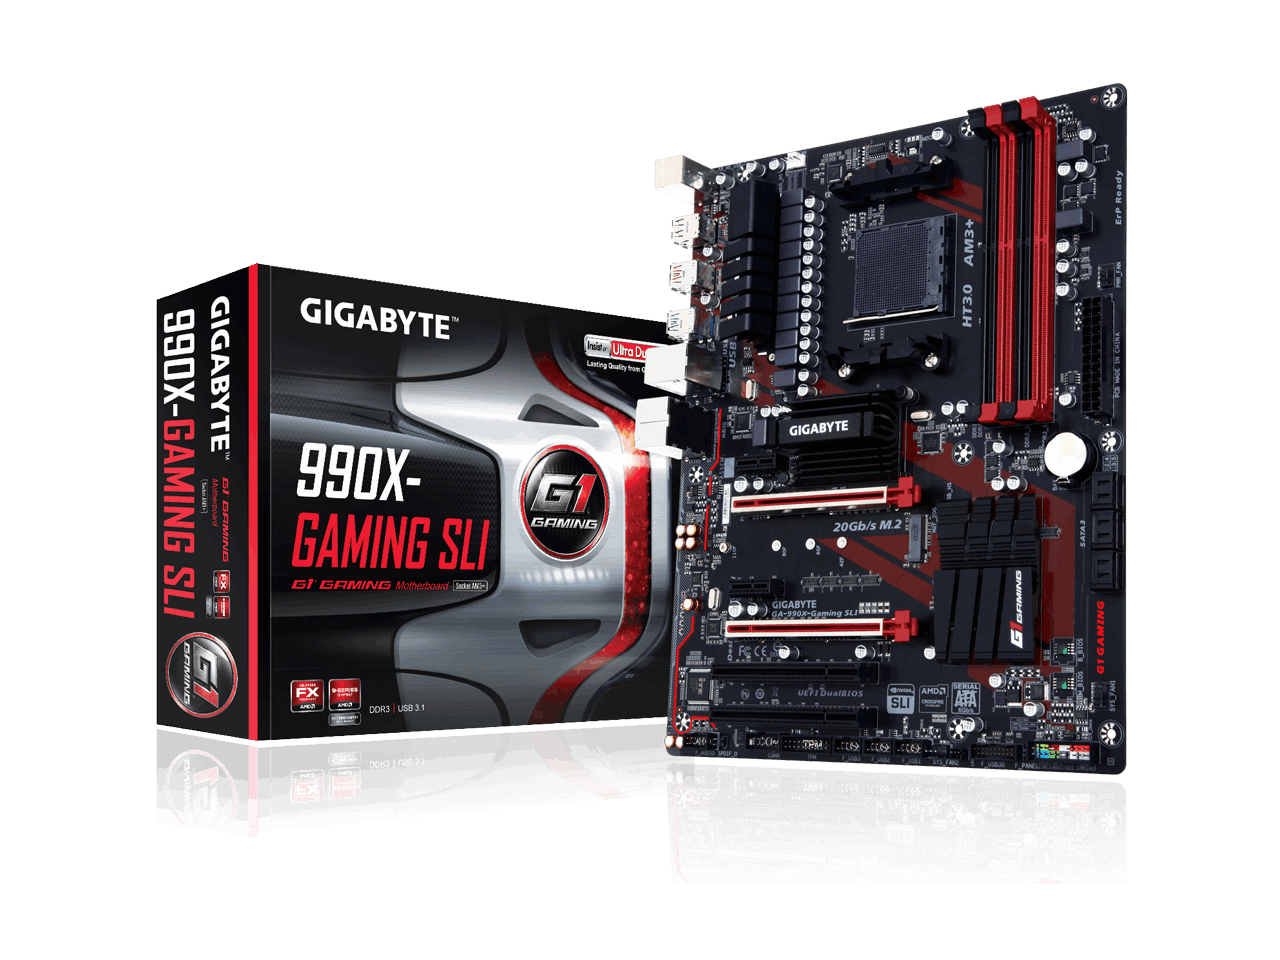 Gigabyte 990fx. Fx990 am3+. Gigabyte ga AMD. Материнская плата Gigabyte ga-990fx-Gaming.